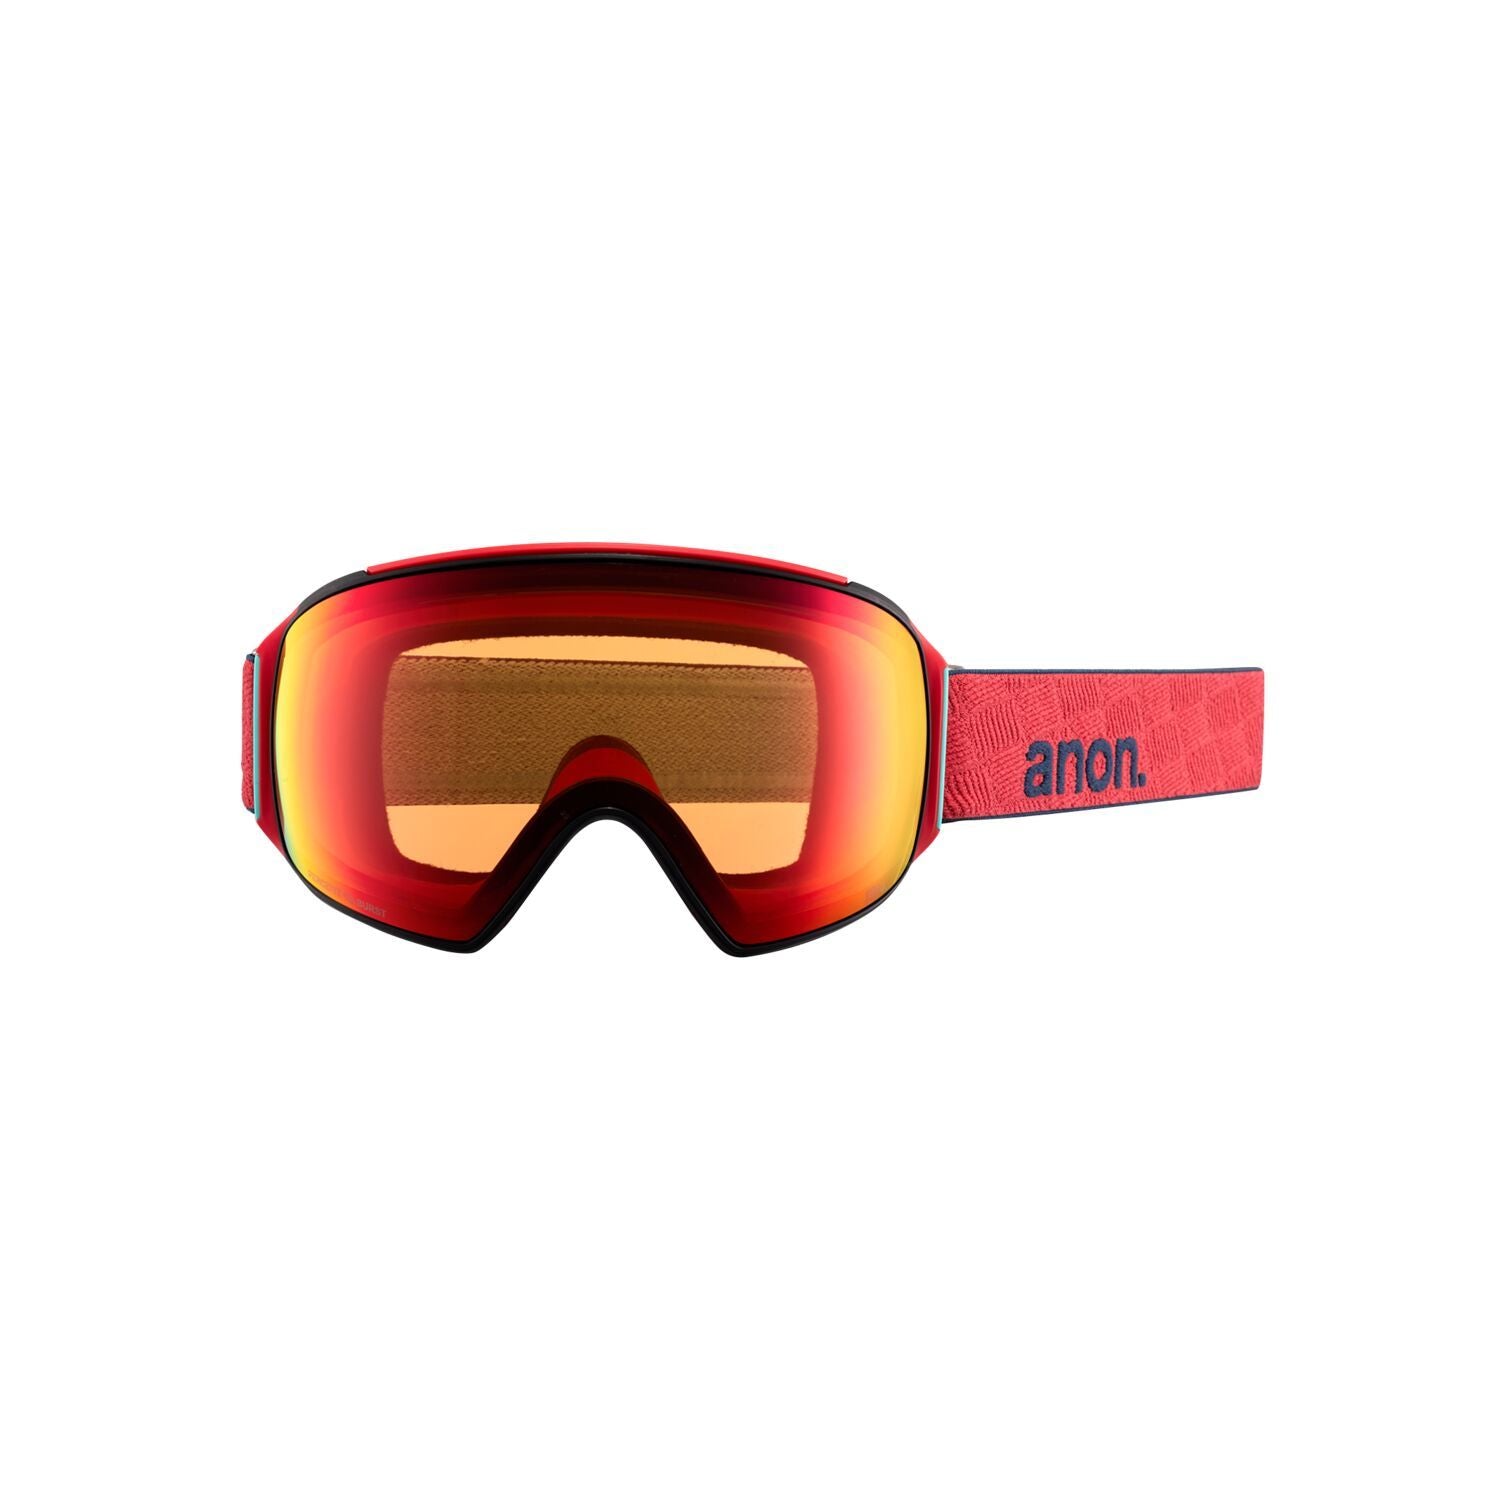 Anon M4 Toric Goggles + Bonus Lens + MFI Face Mask - Low Bridge Fit Coral / Perceive Sunny Bronze Snow Goggles